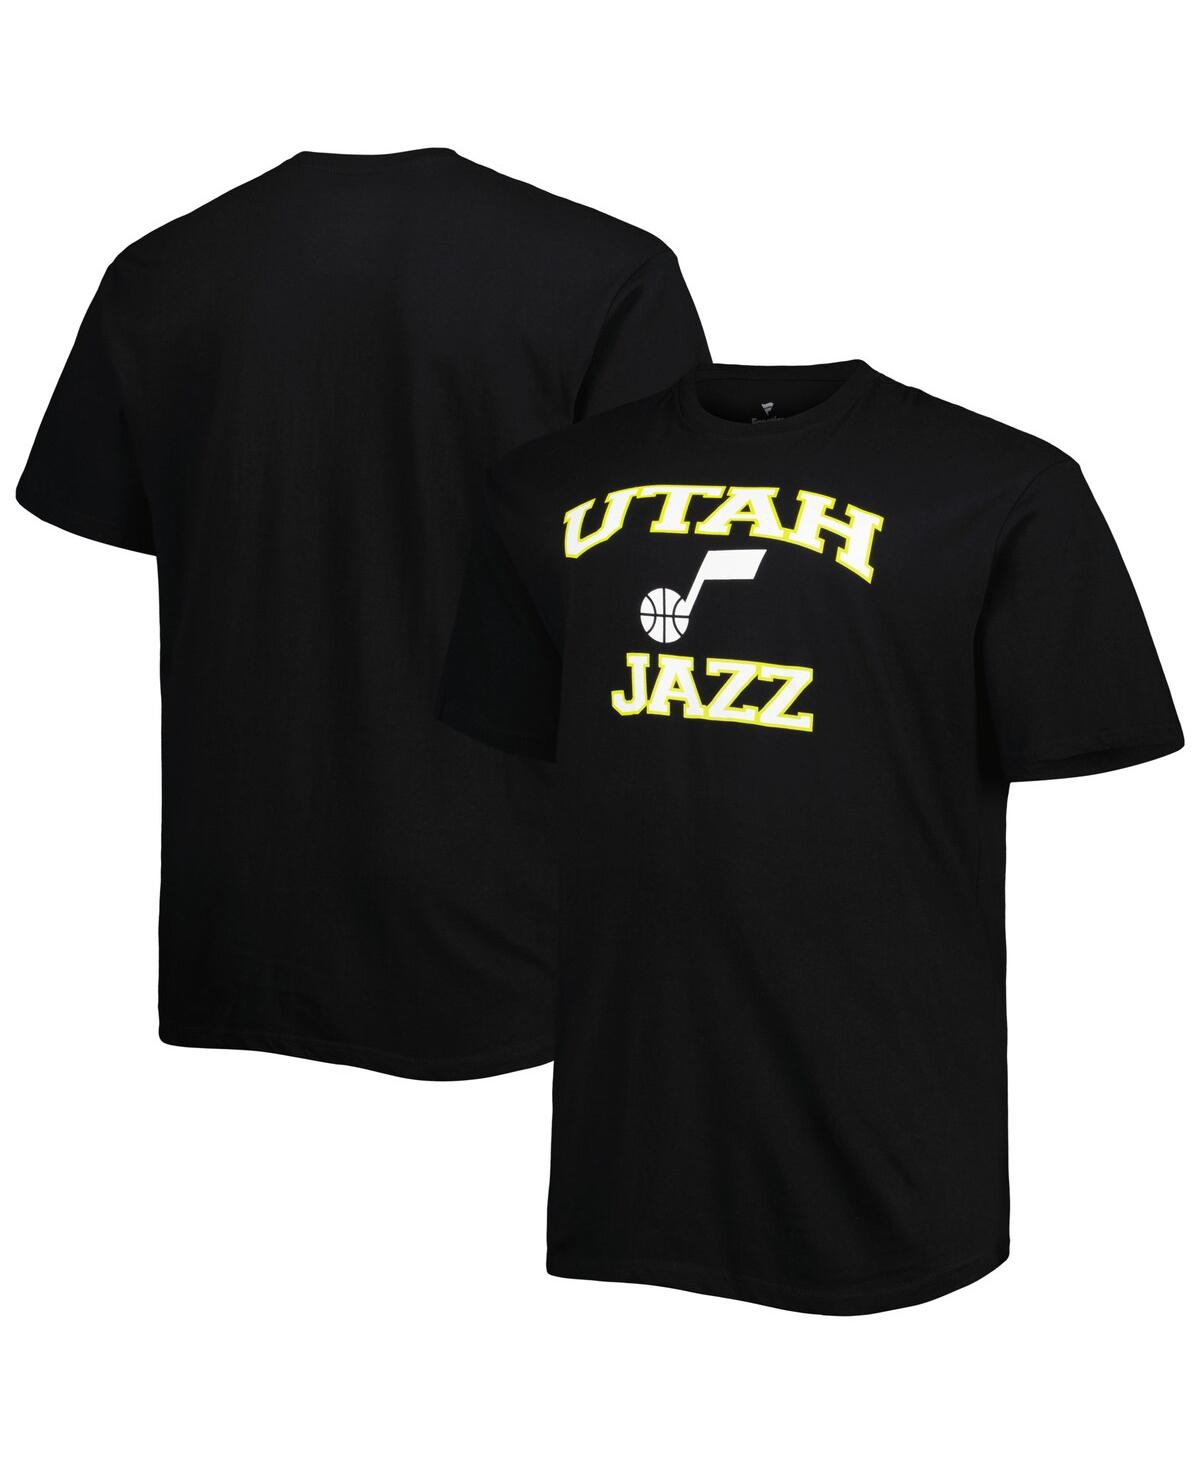 Men's Black Utah Jazz Big and Tall Heart and Soul T-shirt - Black